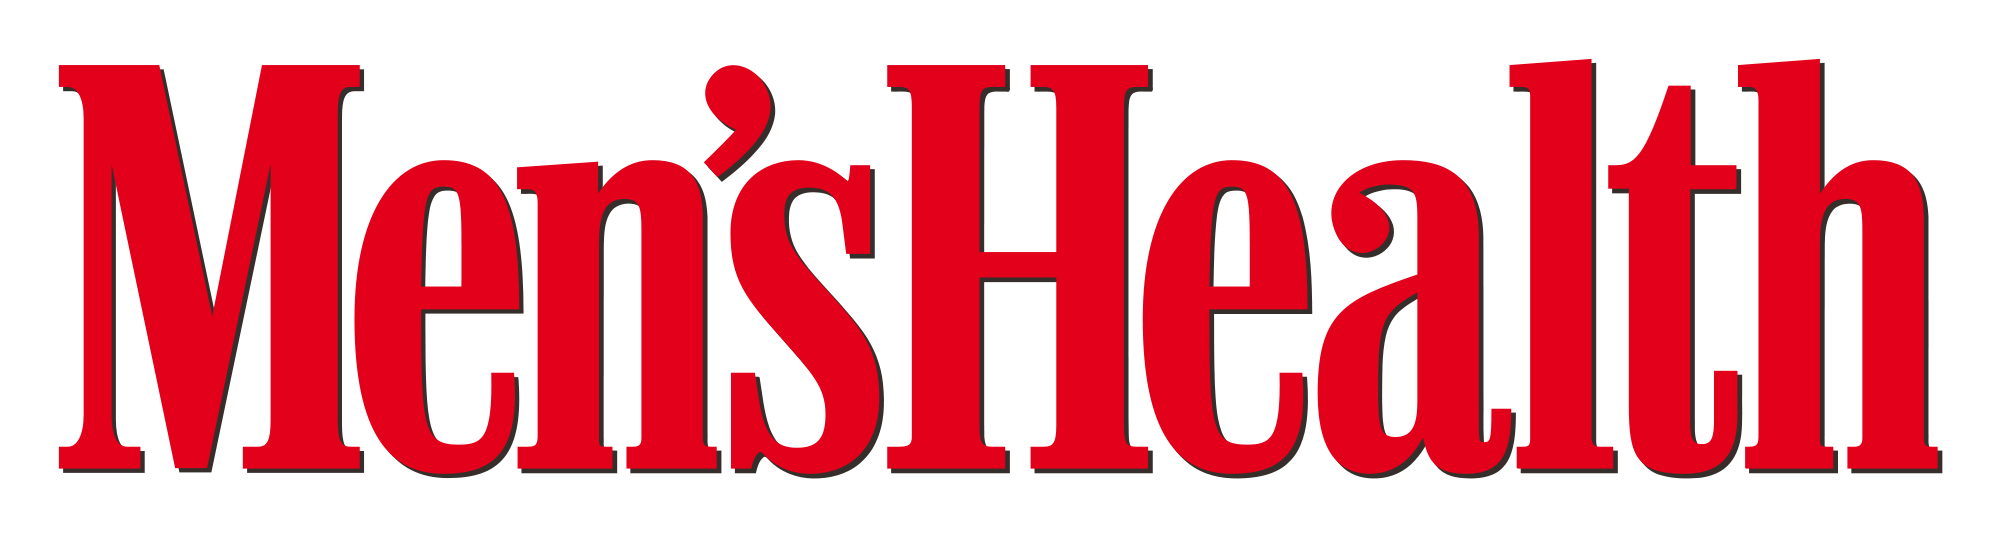 Mens-health-logo